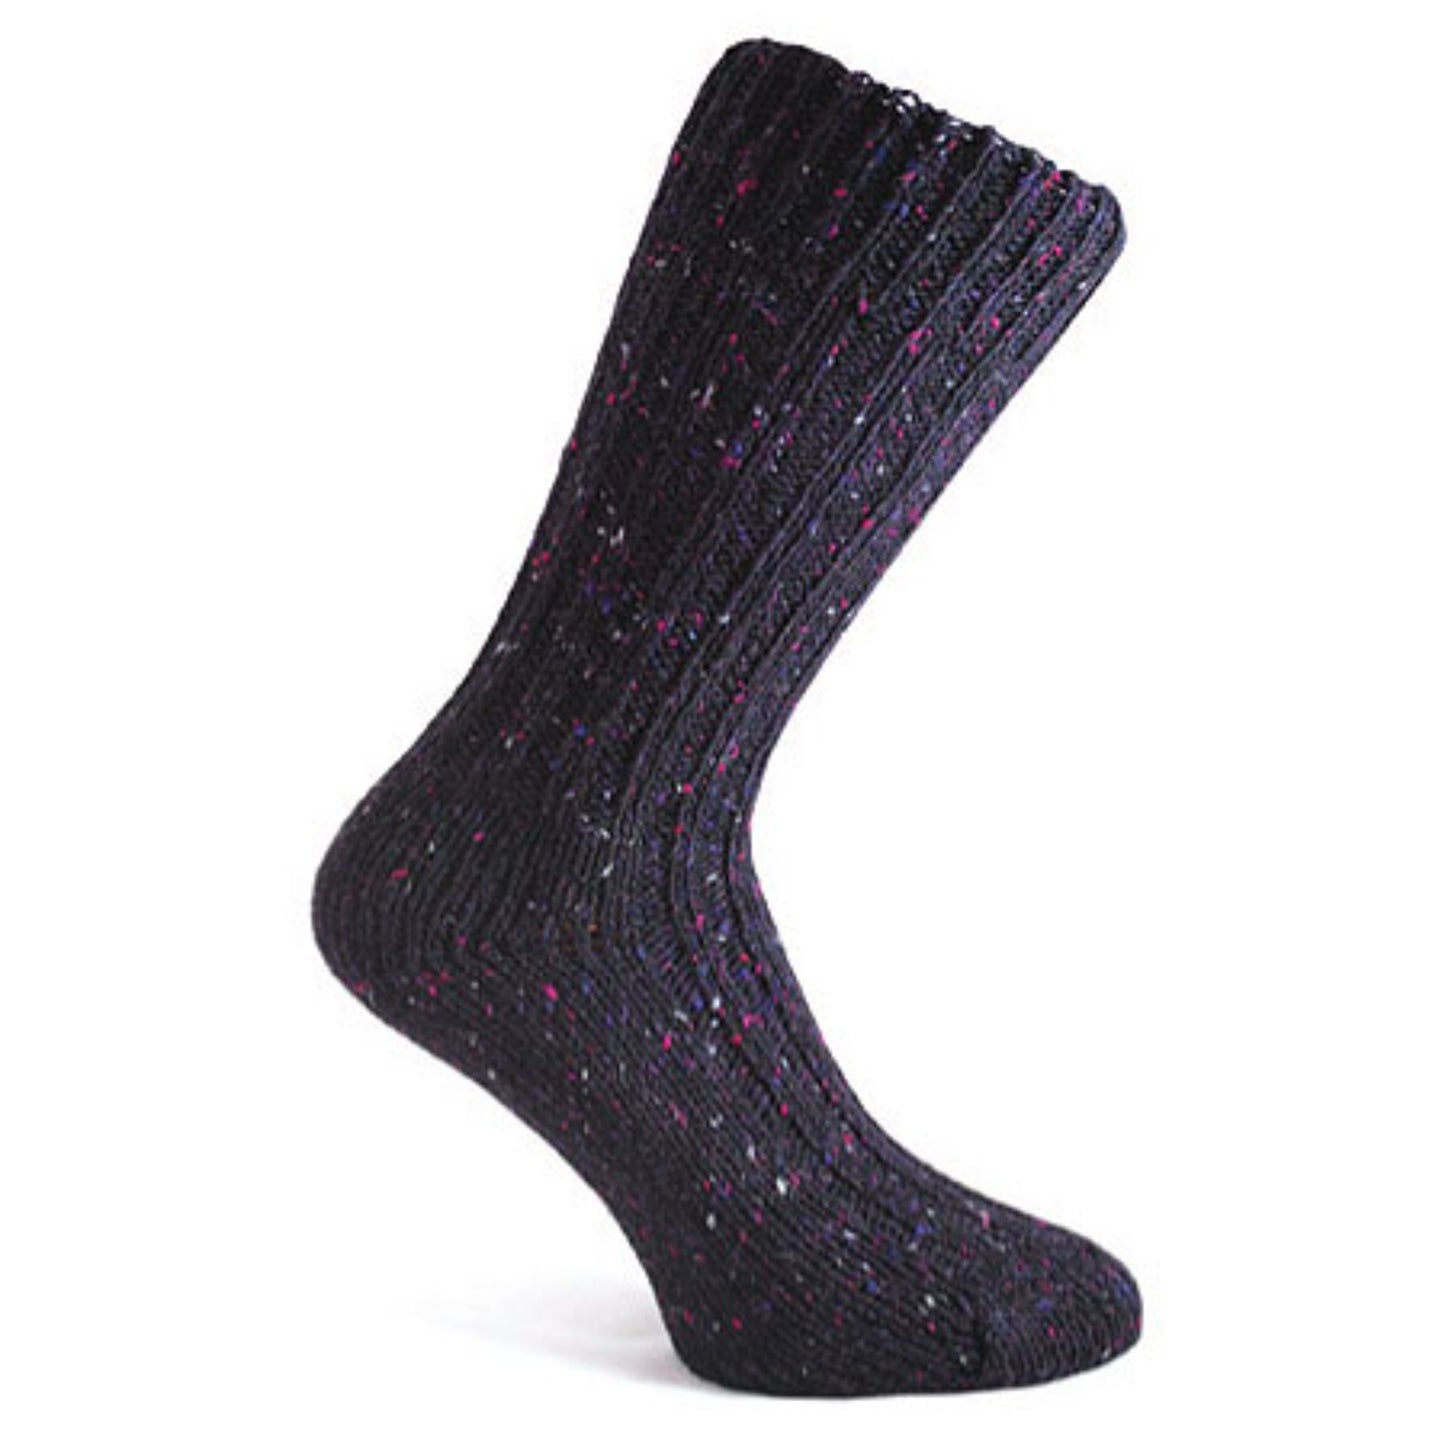 Donegal Socks Size 4-7